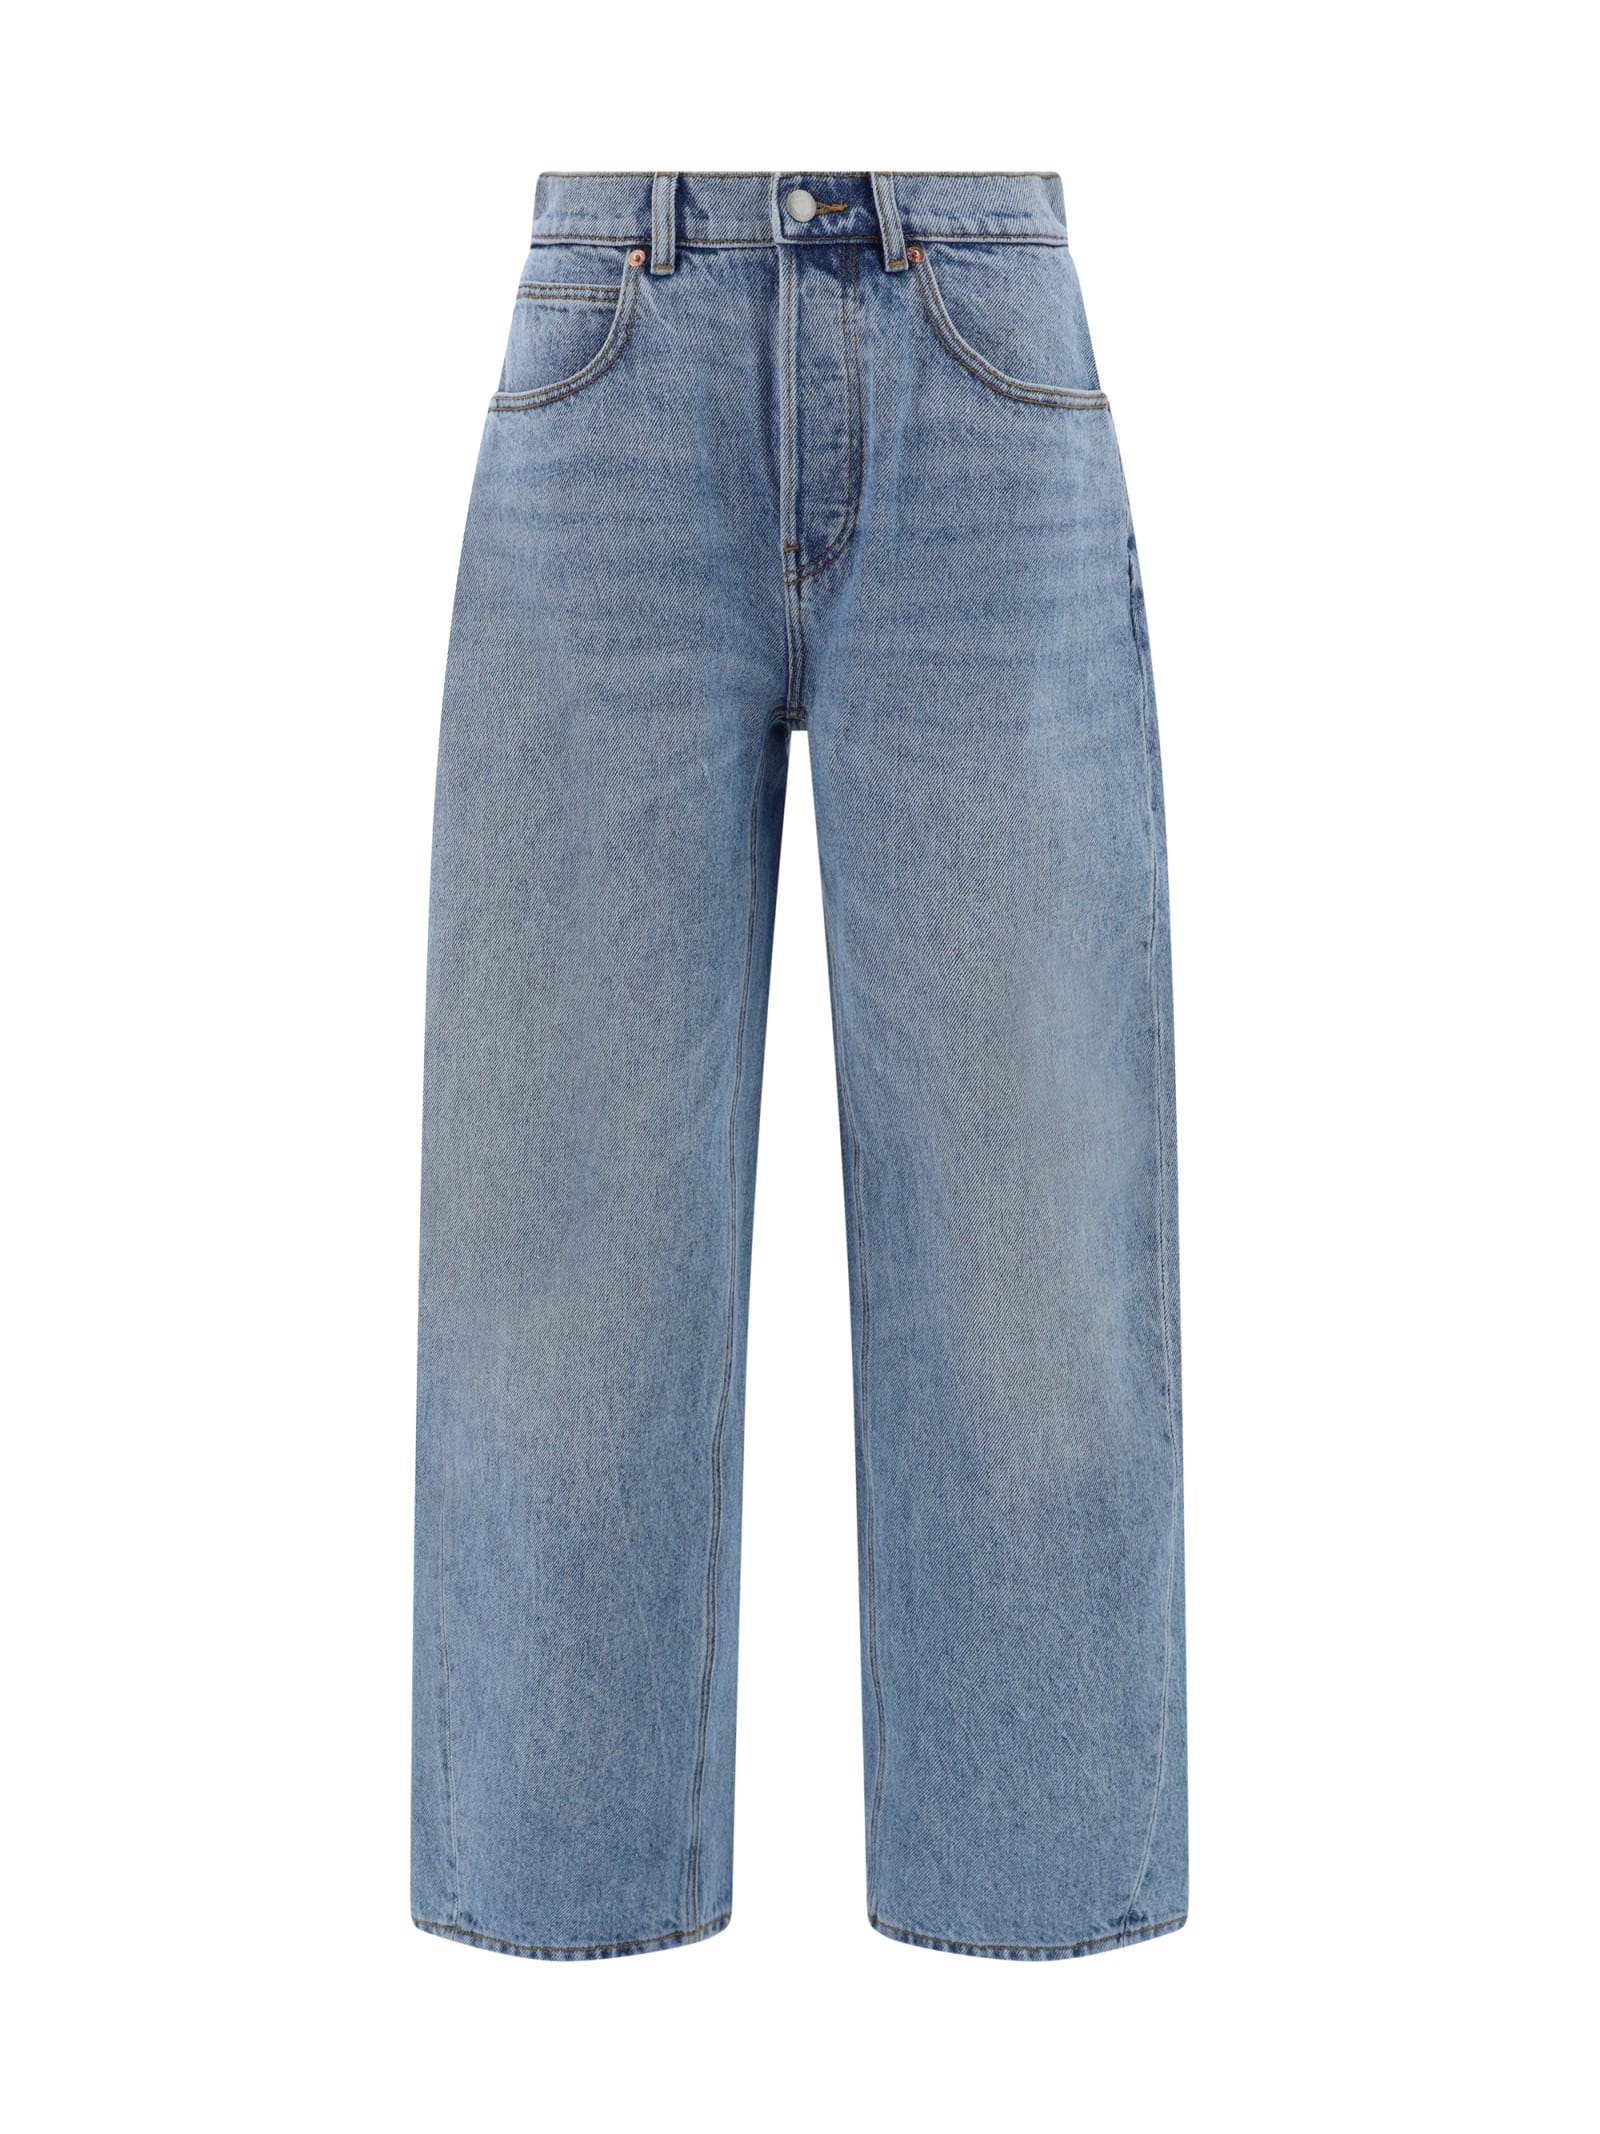 Shop Alexander Wang Jeans In A Classic Light Indigo